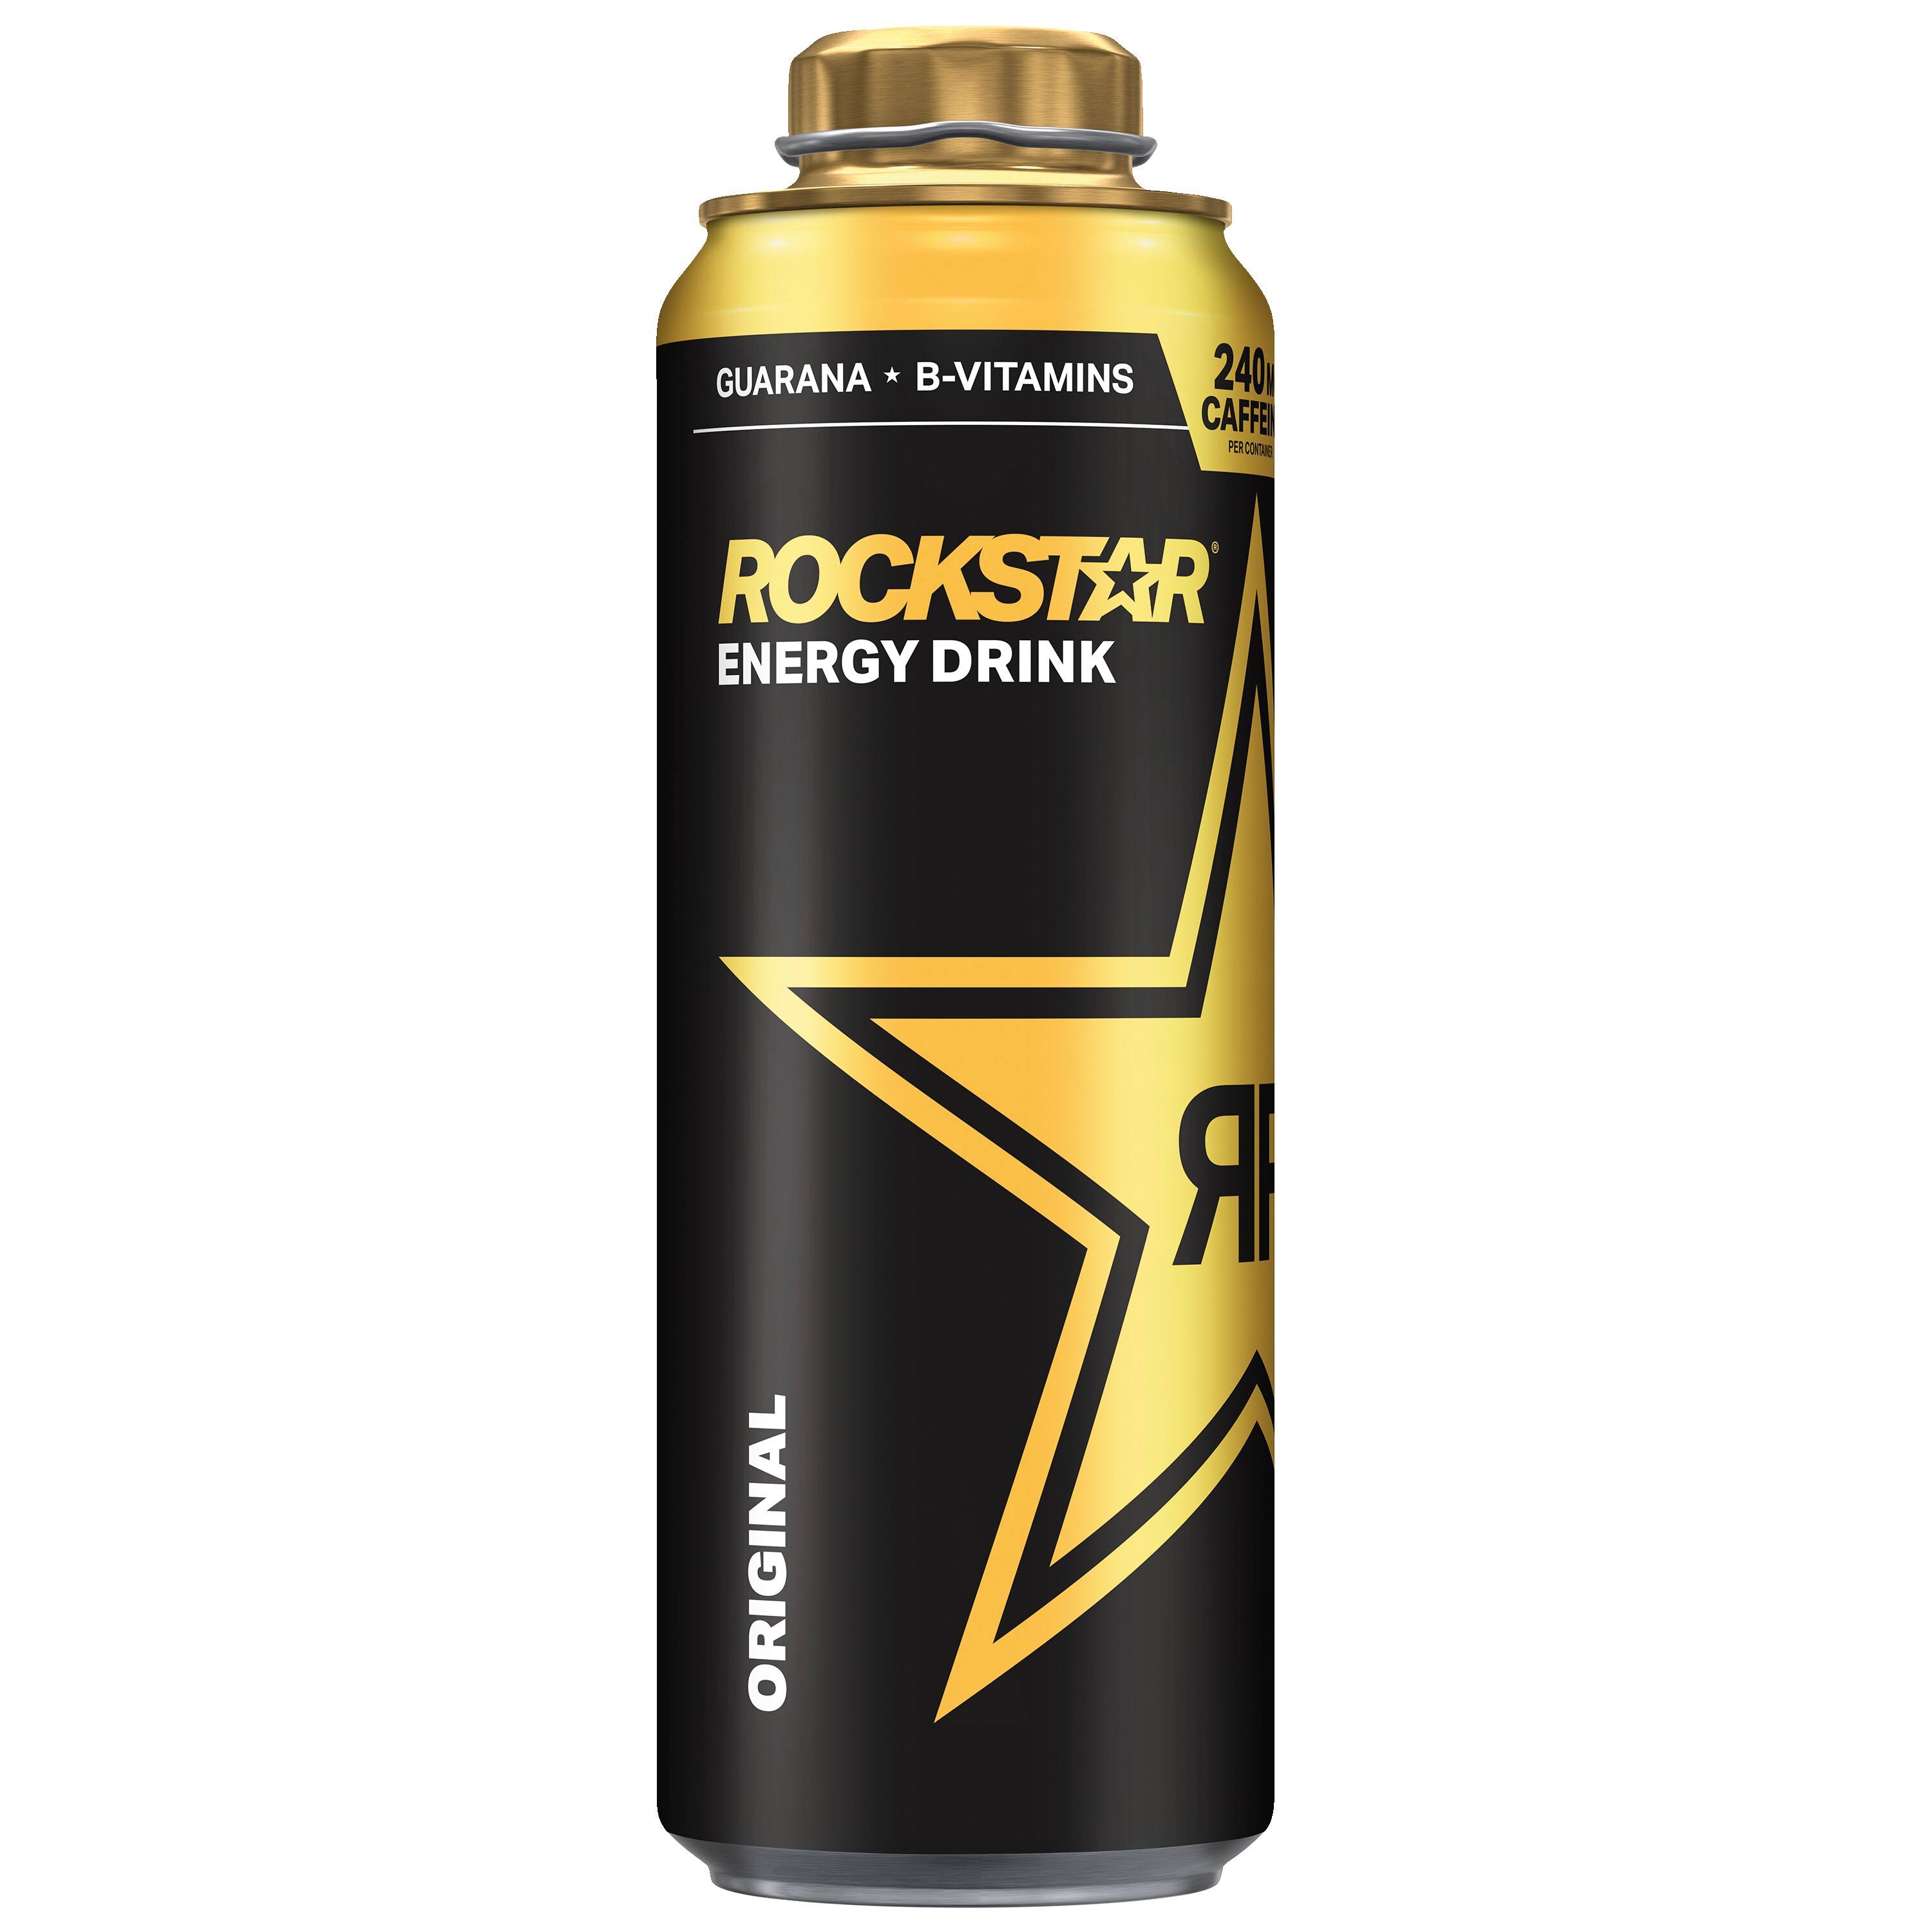 Rockstar Energy Drink - Triple Strength, 24oz, Pack of 12